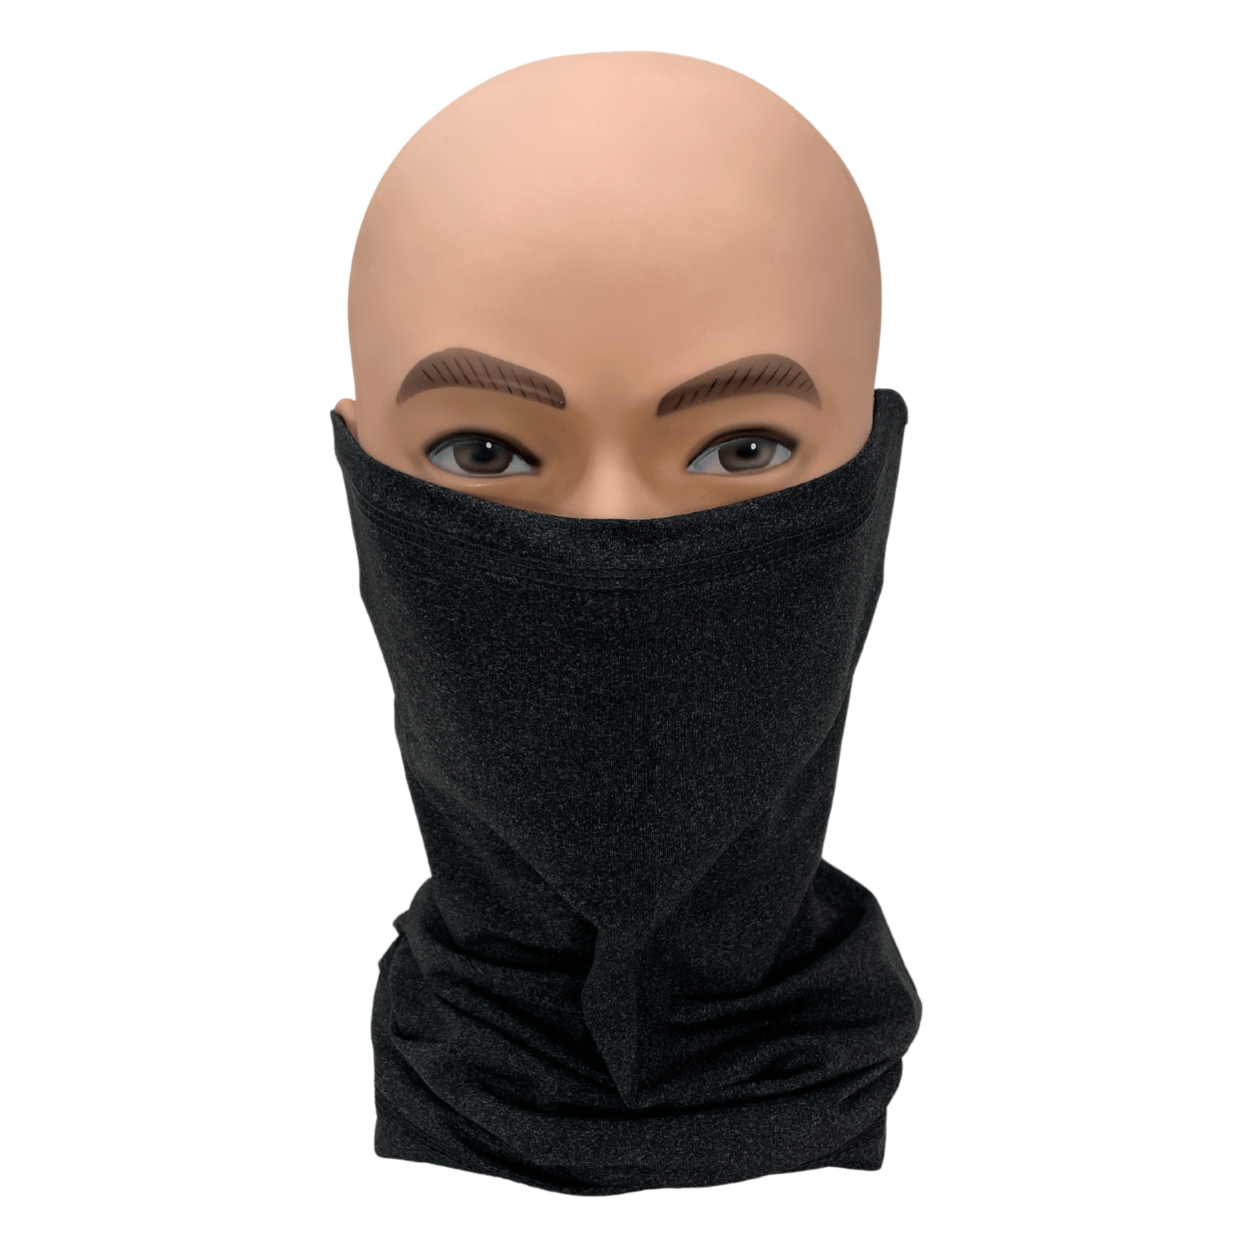 Premium Sports Neck Gaiter Face Mask For Outdoor Activities - Heather Grey